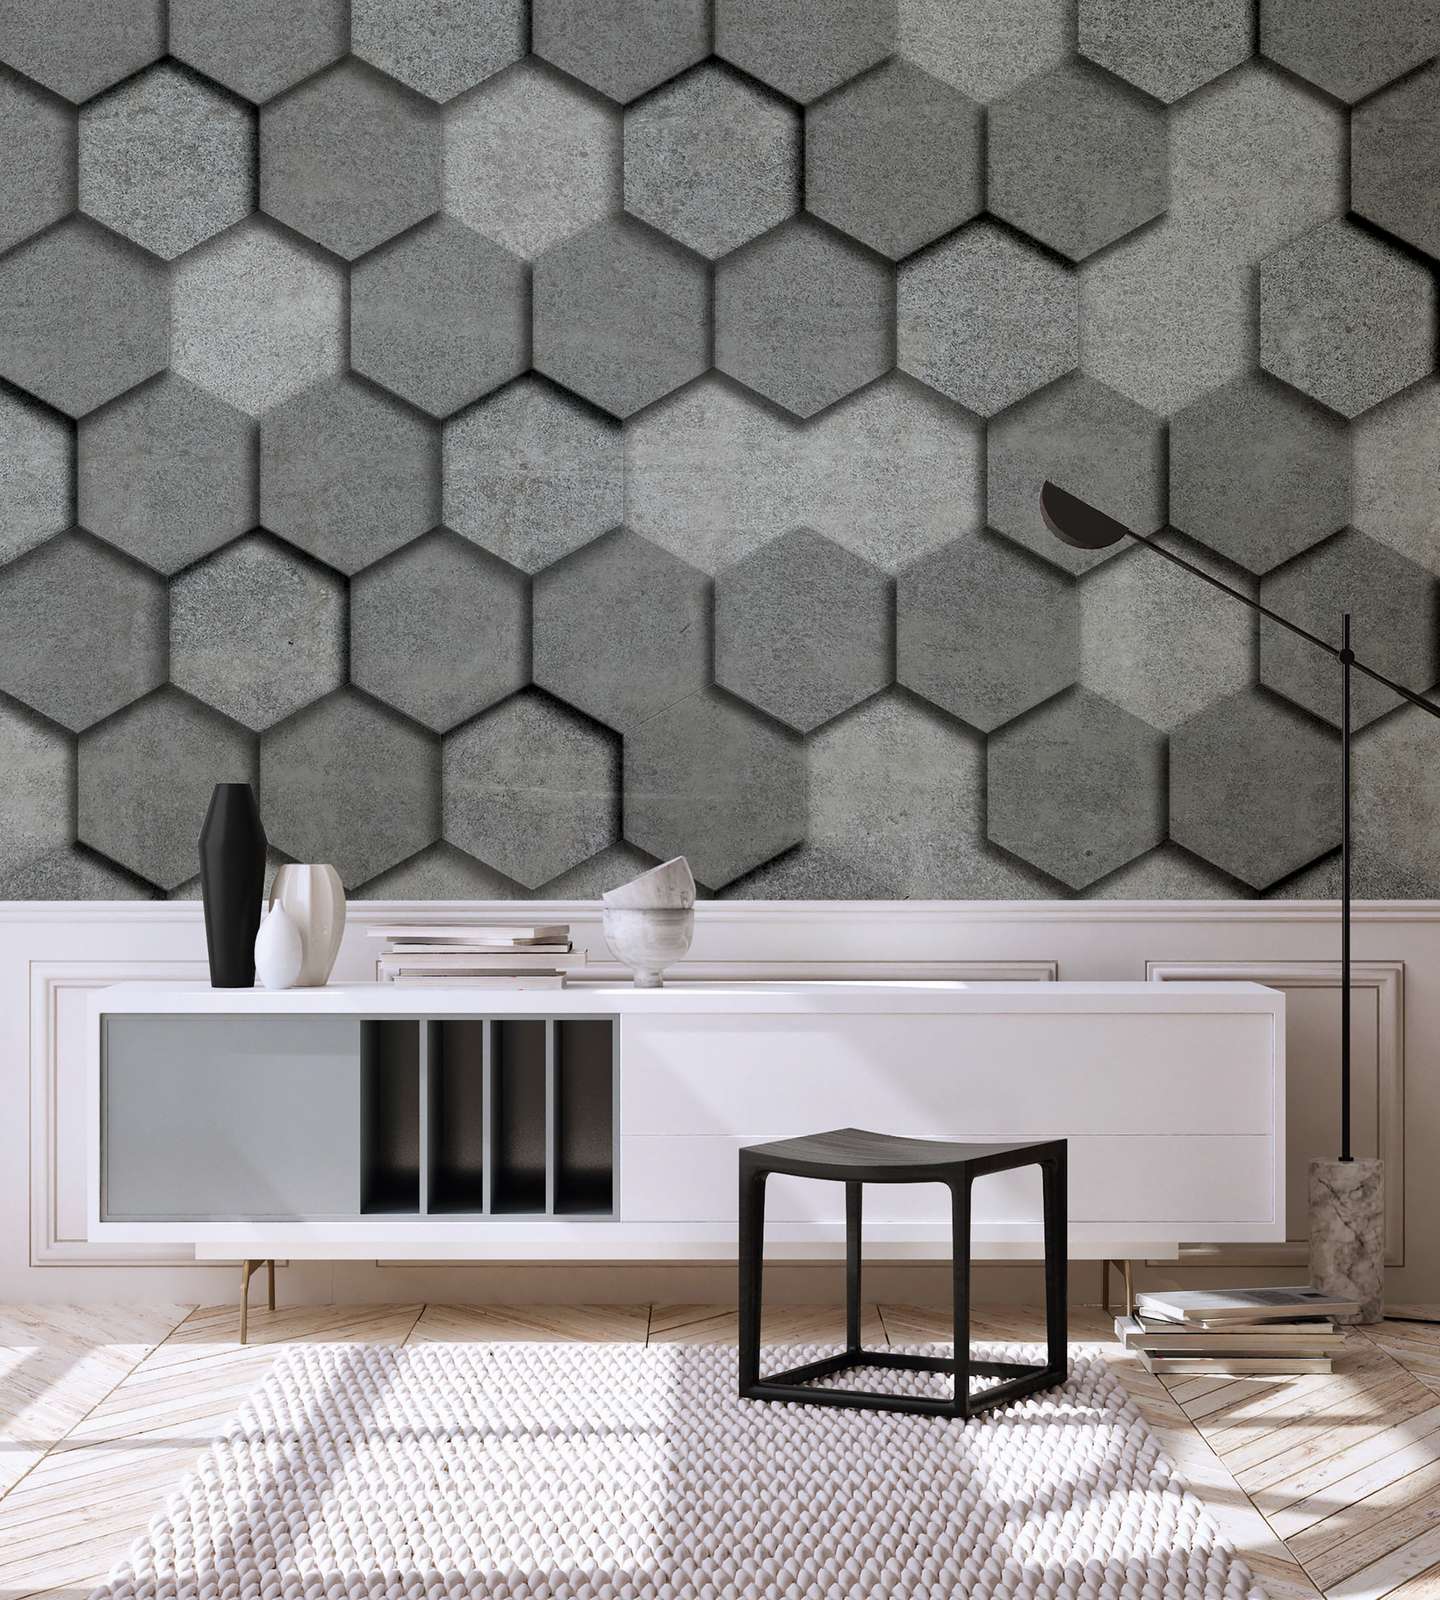             Mural de pared con azulejos geométricos de aspecto hexagonal 3D - gris, plata
        